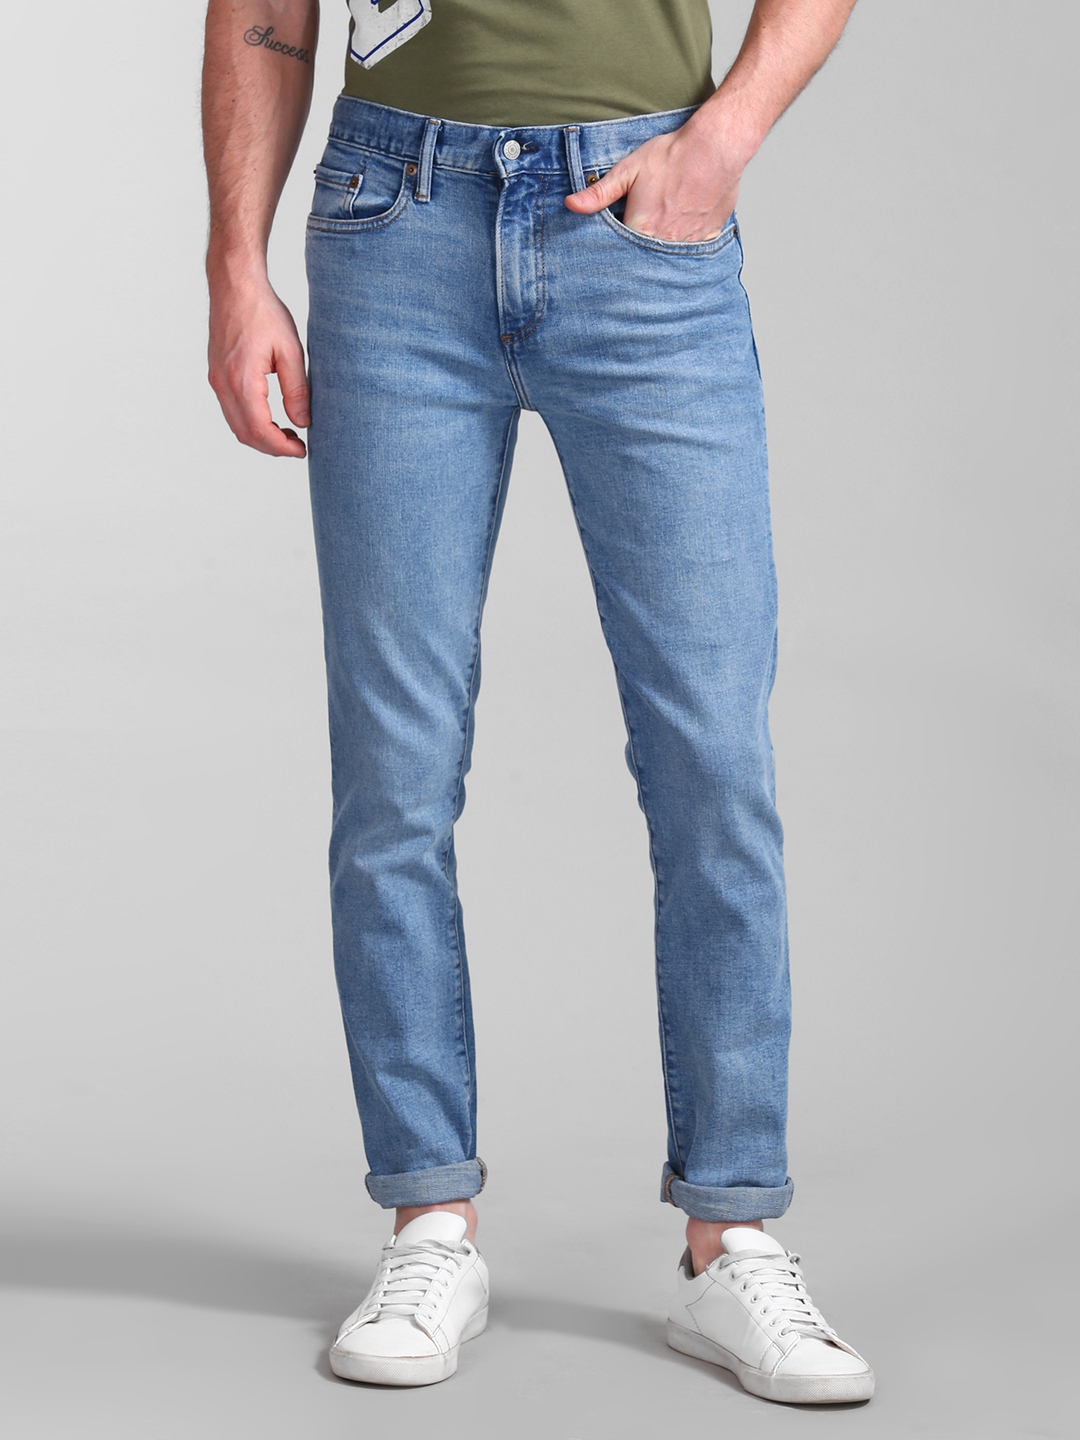 gap mens jeans